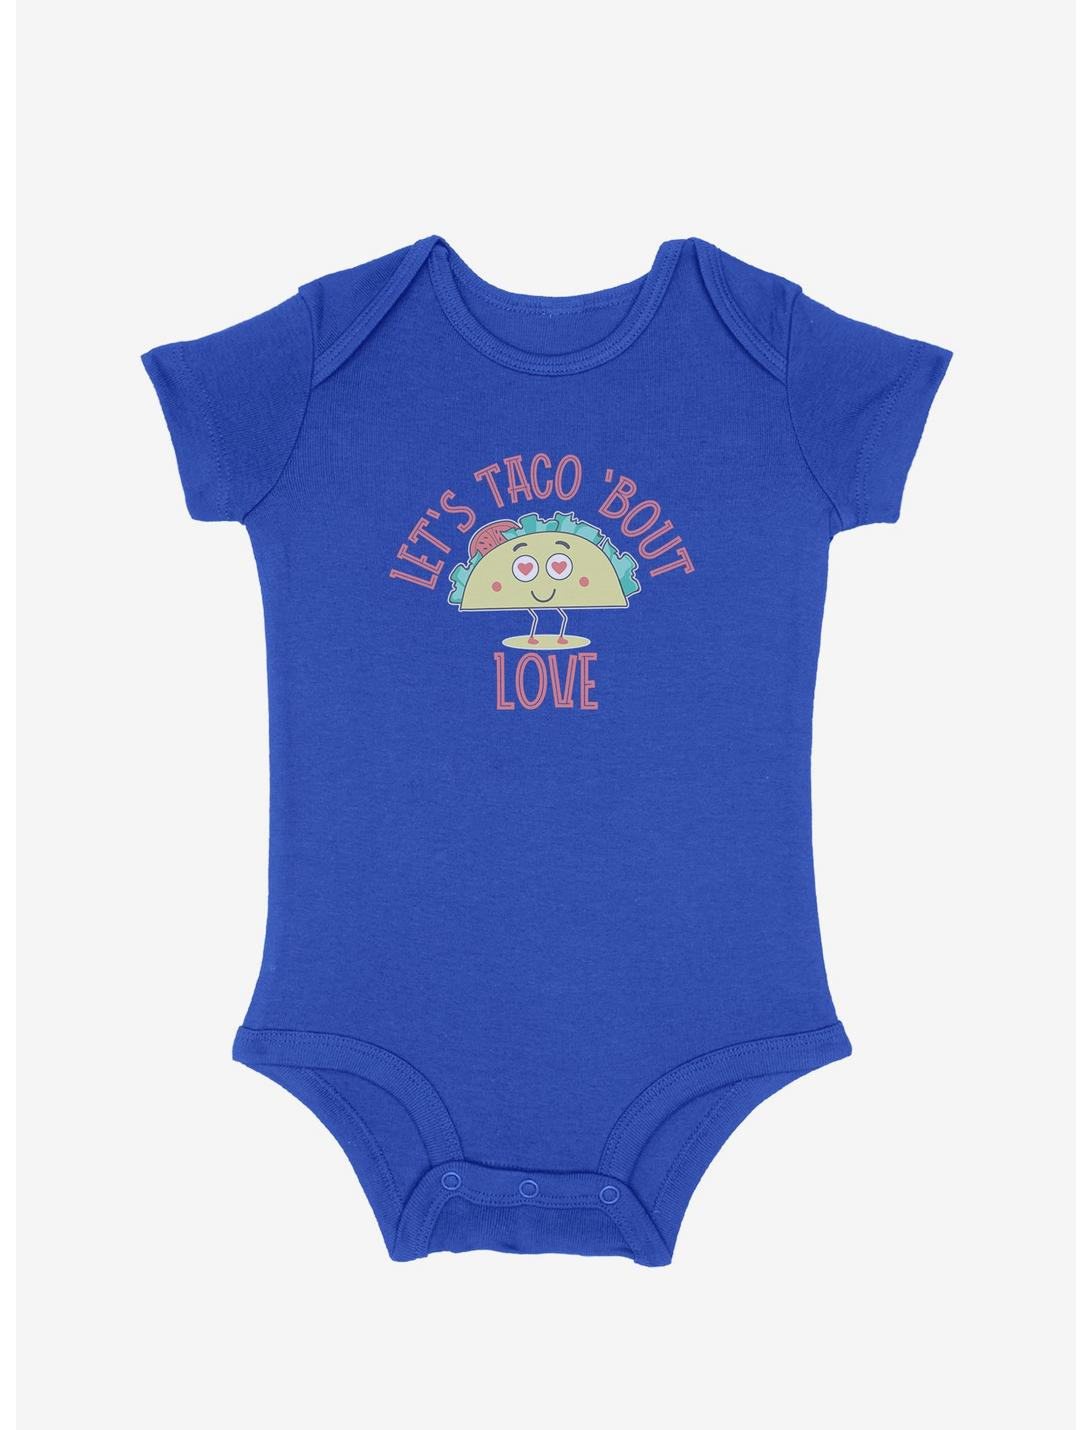 Let's Taco 'Bout Love Infant Bodysuit, ROYAL, hi-res